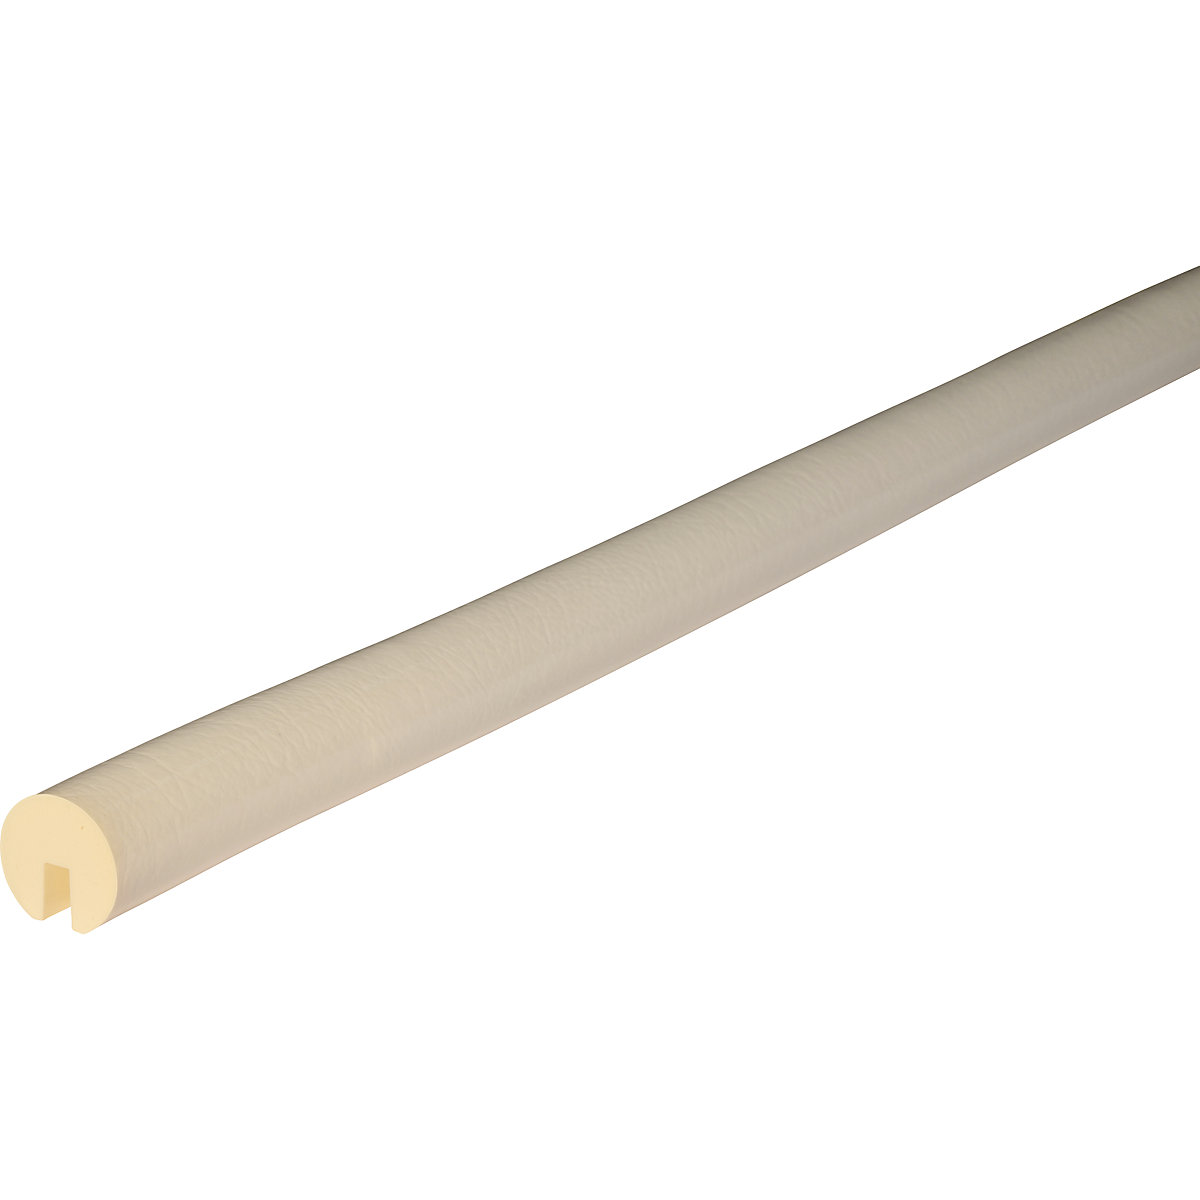 Proteção de rebordos Knuffi® – SHG, tipo B, 1 rolo de 50 m, branco-19